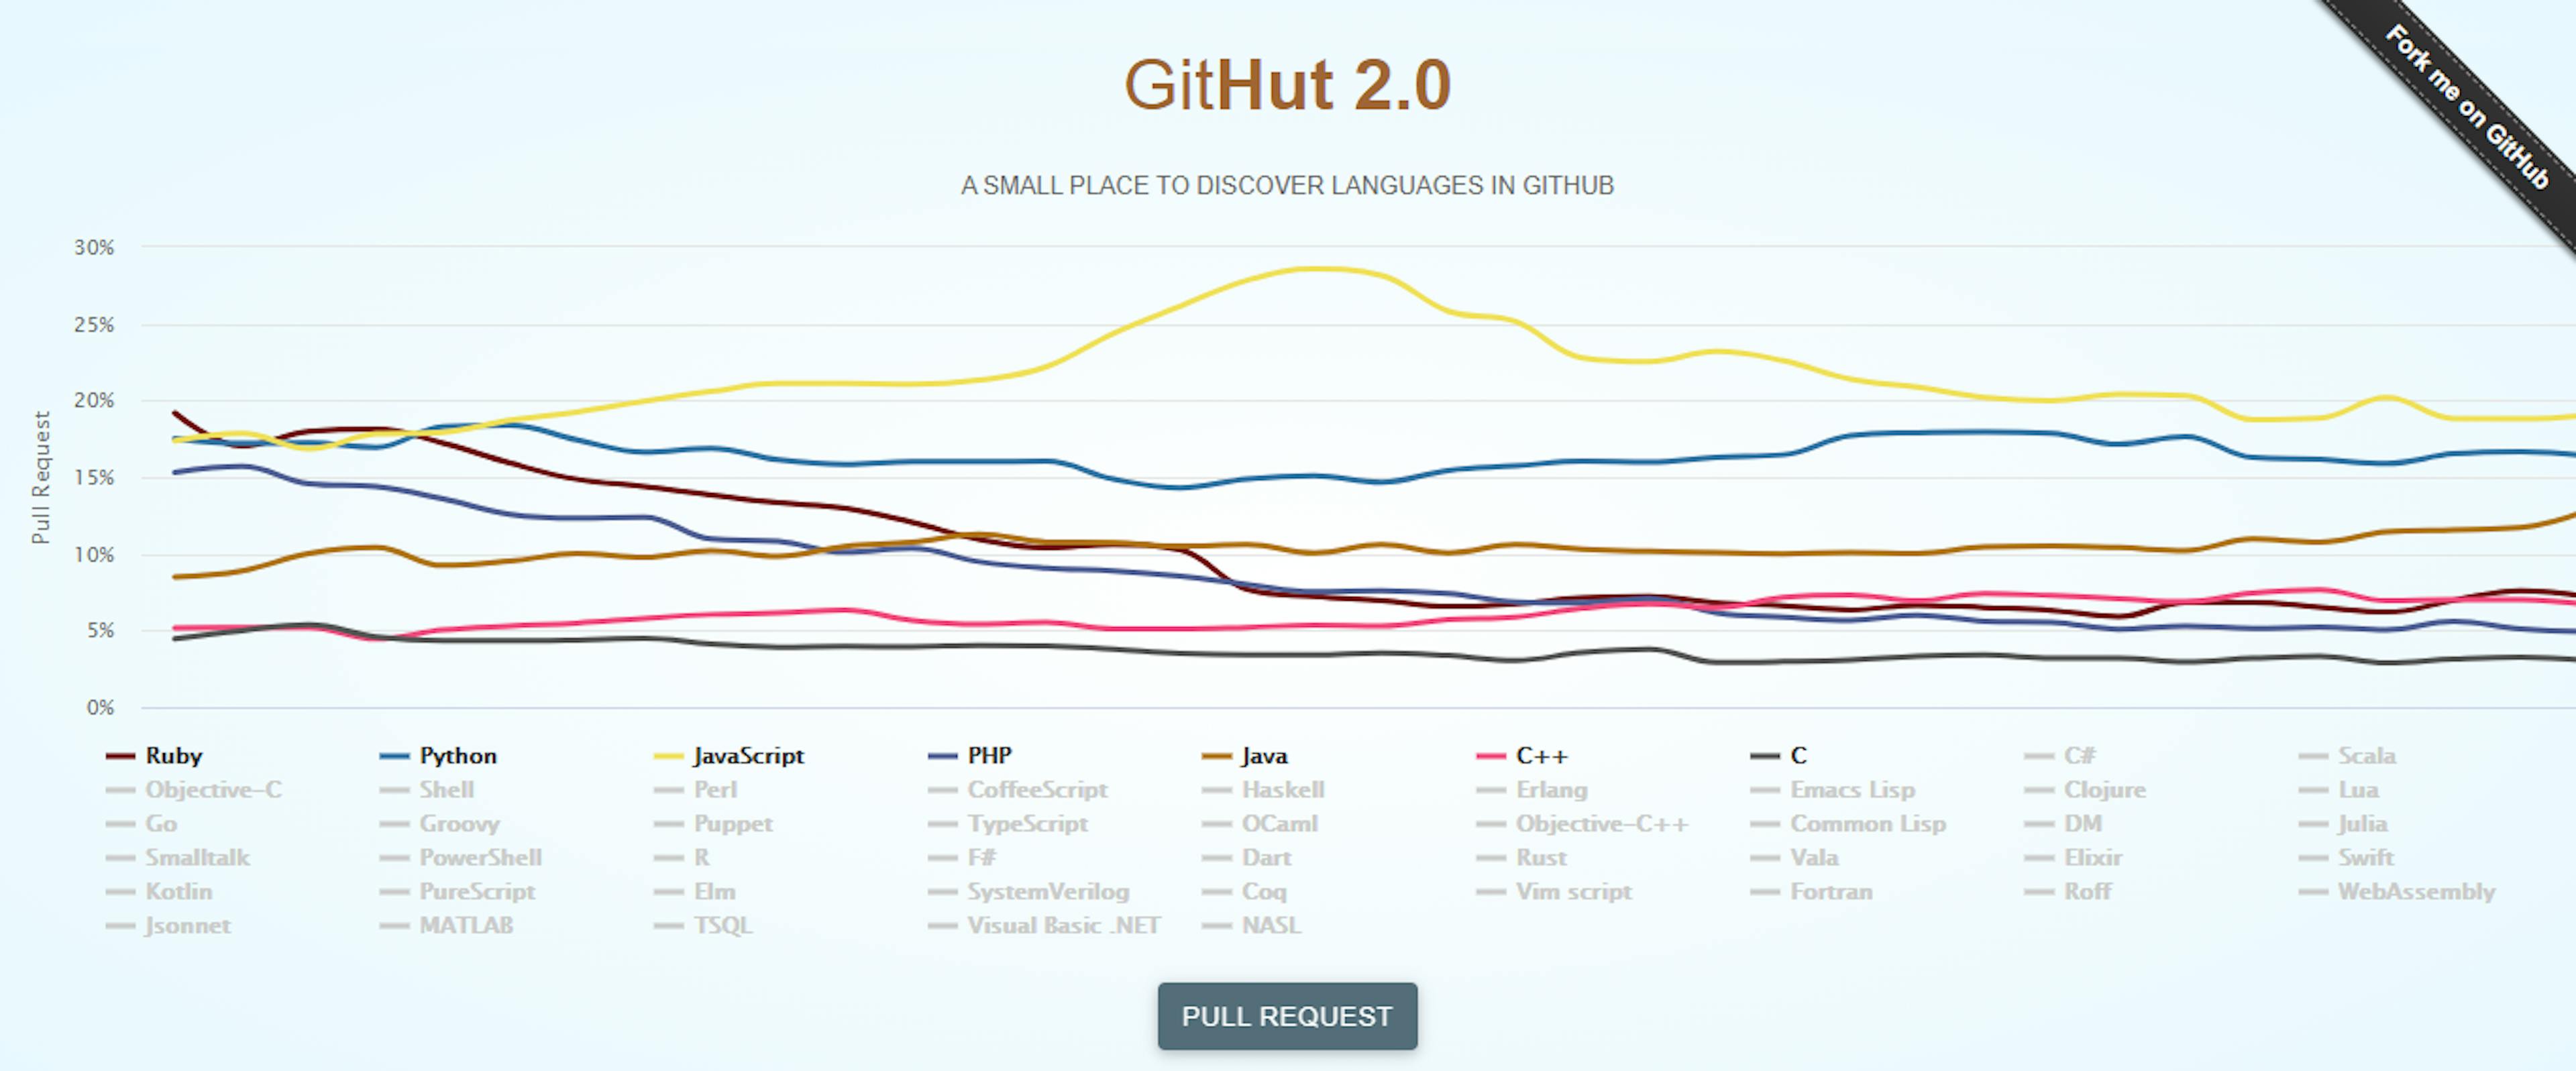 GitHut 2.0